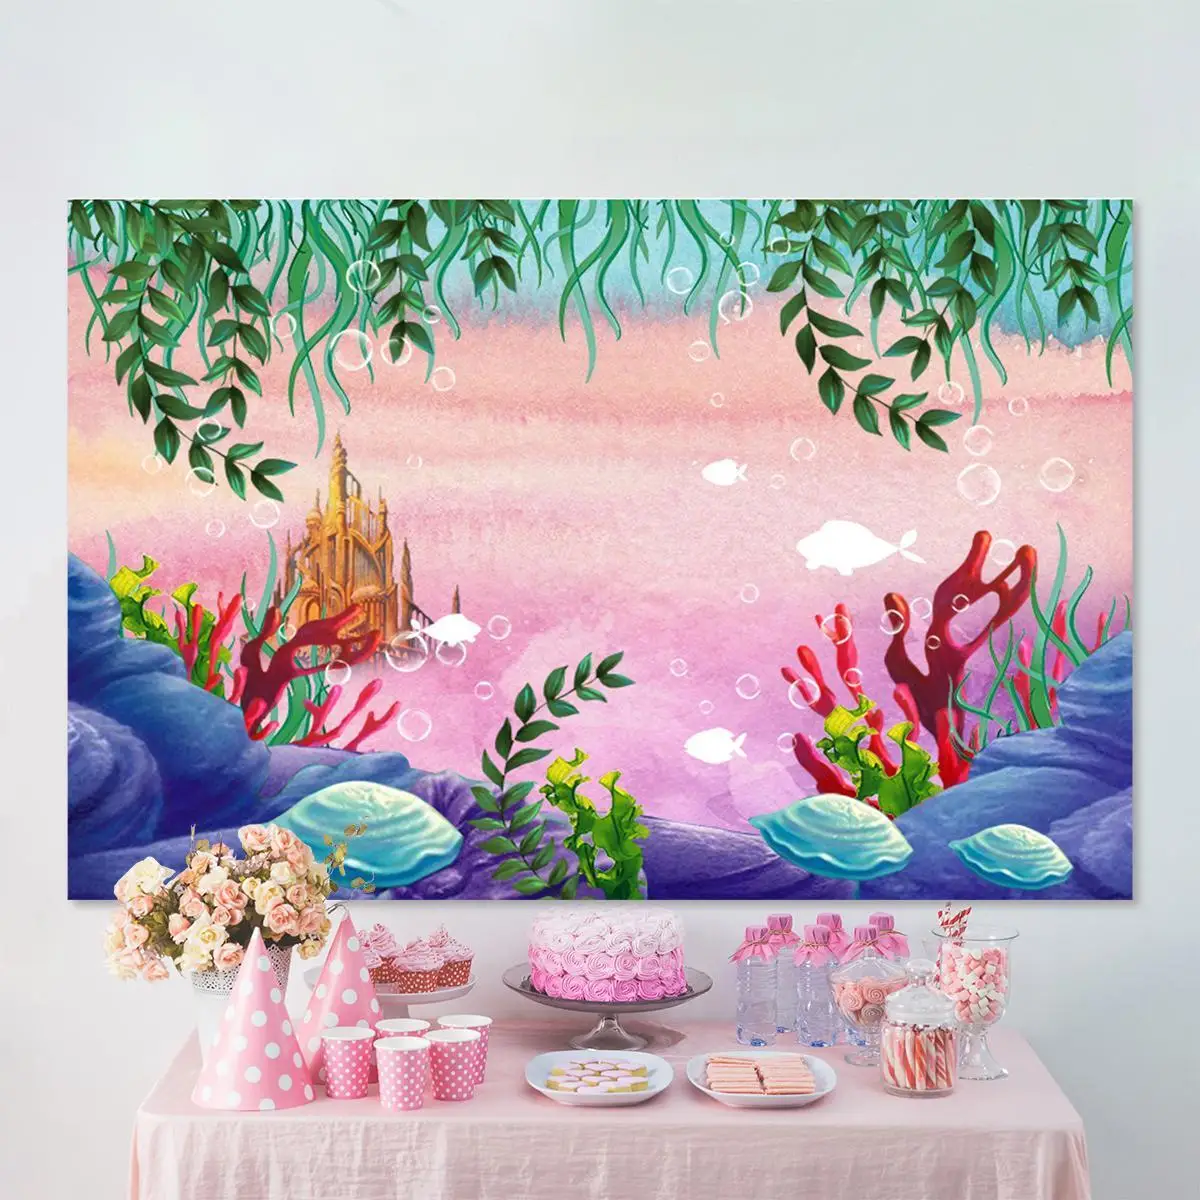 

Photography Background Underwater Theme Mermaid Birthday Party Baby Shower Fish Decor Photocall Backdrop Photo Studio Prop Vinyl